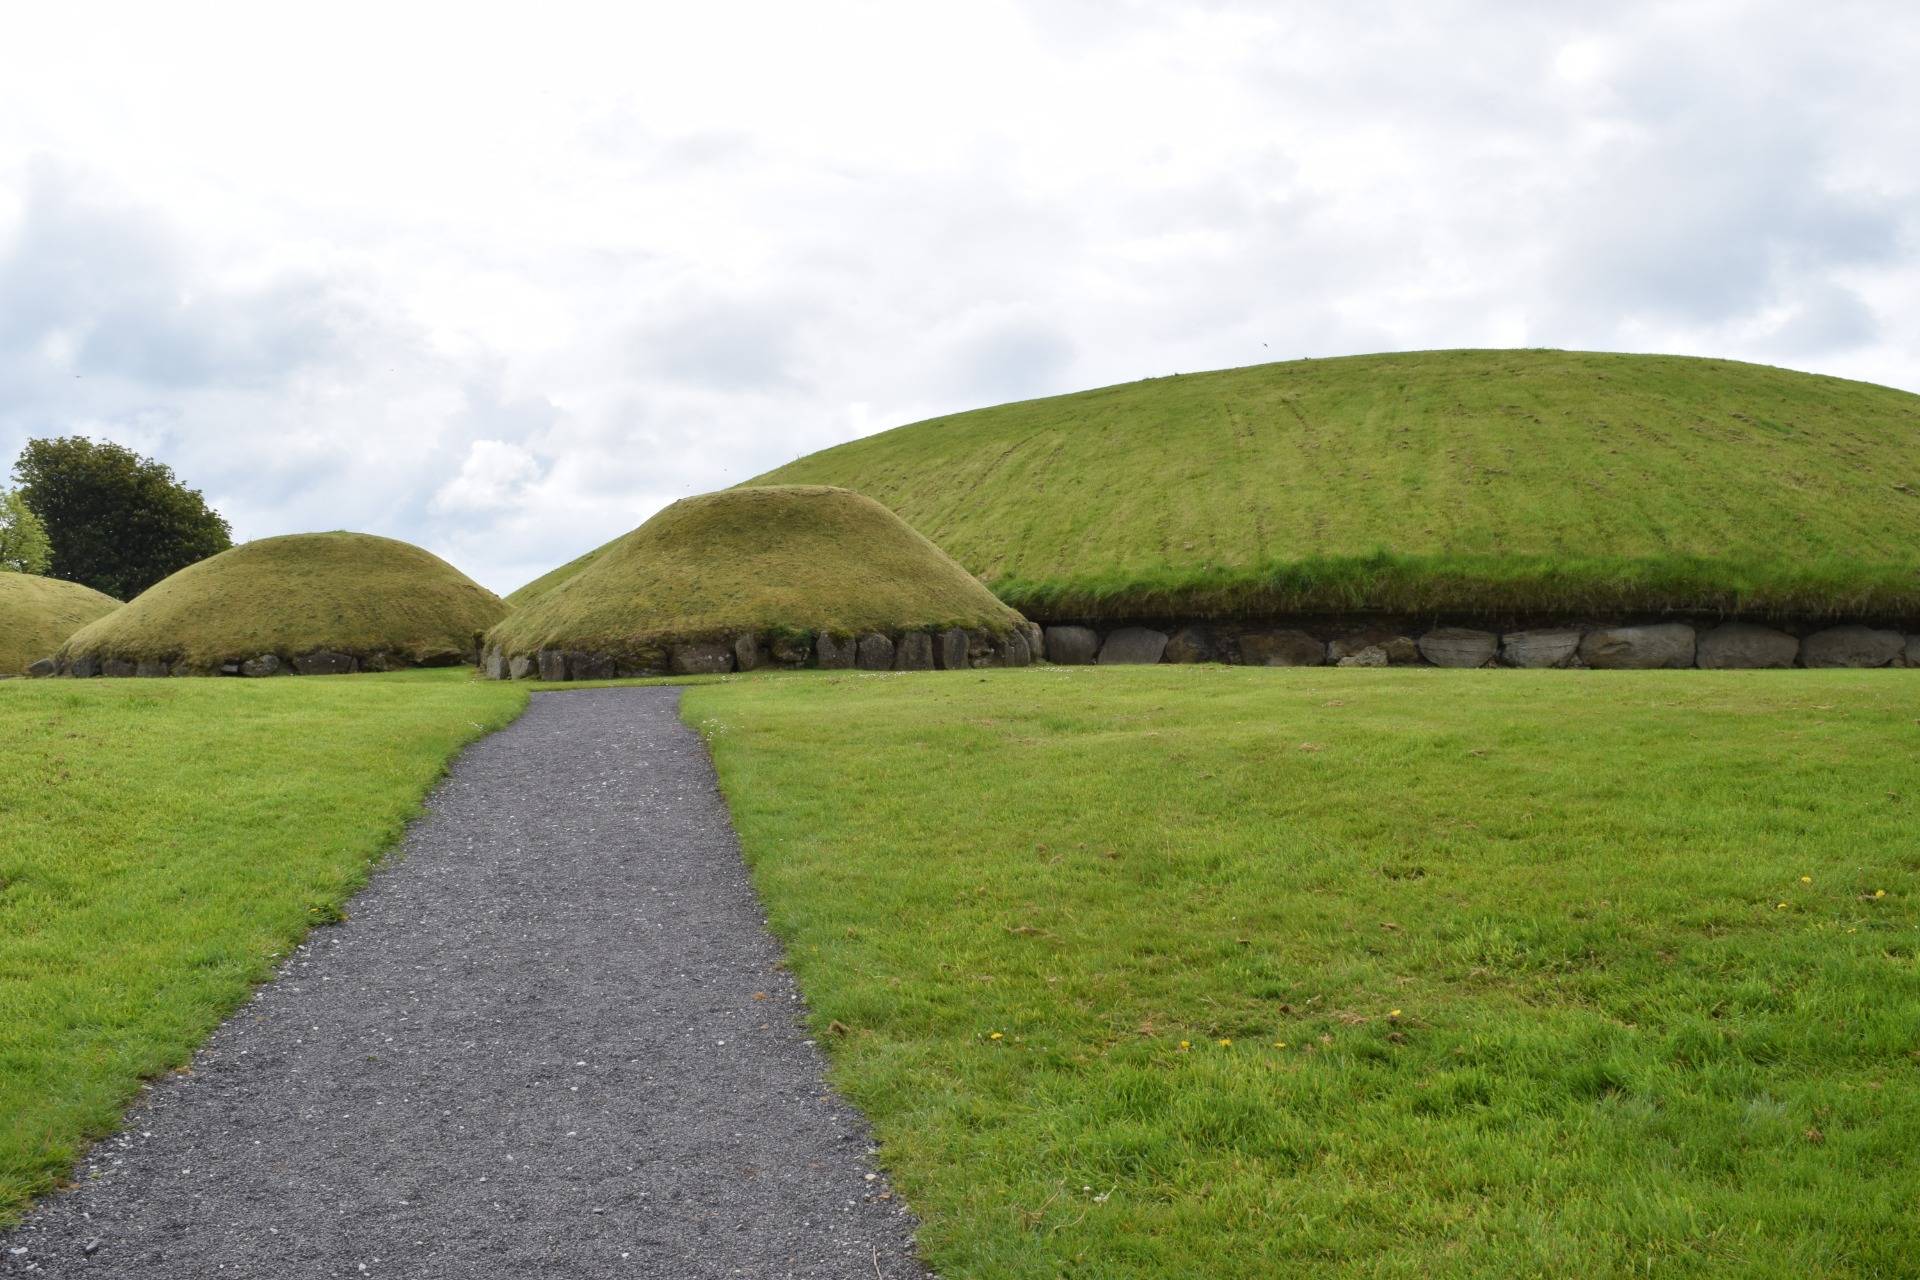 Neolithic grave sites Knowth and Newgrange - Ireland